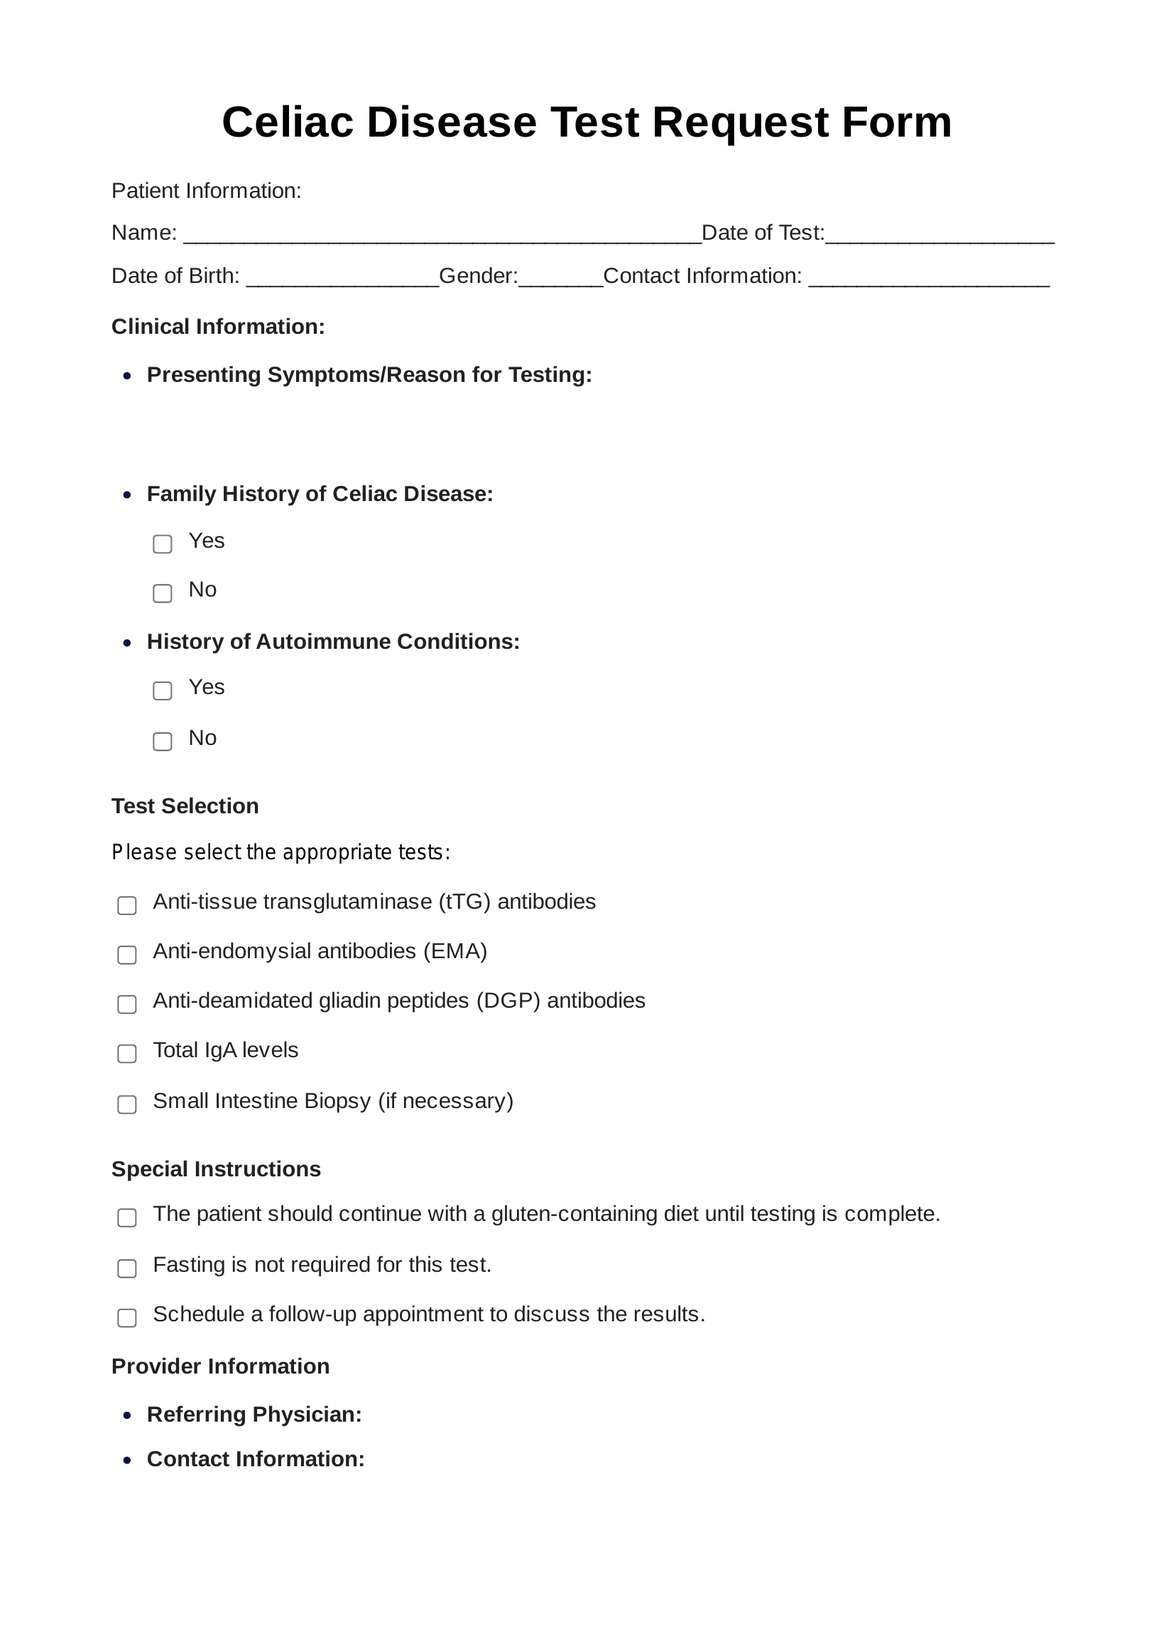 Celiac Disease Test PDF Example